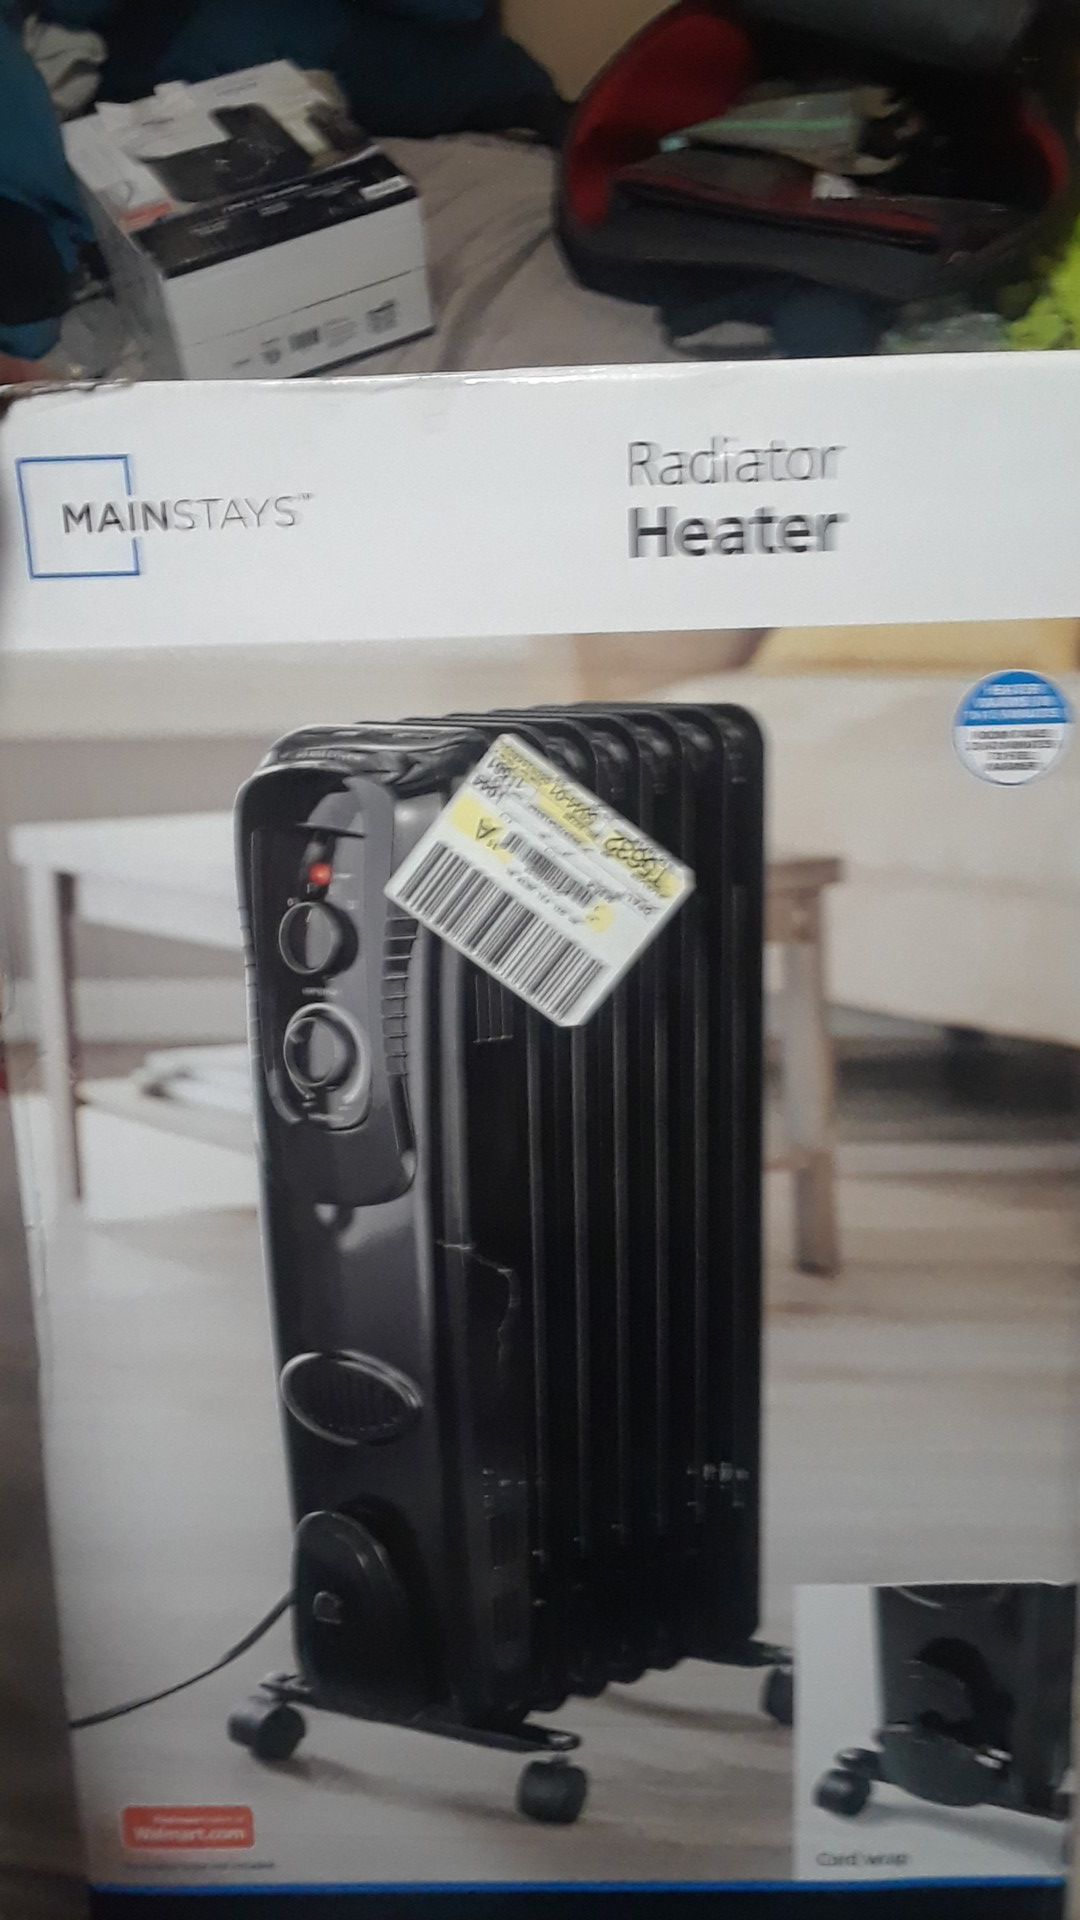 MAINSTAY radiator heater